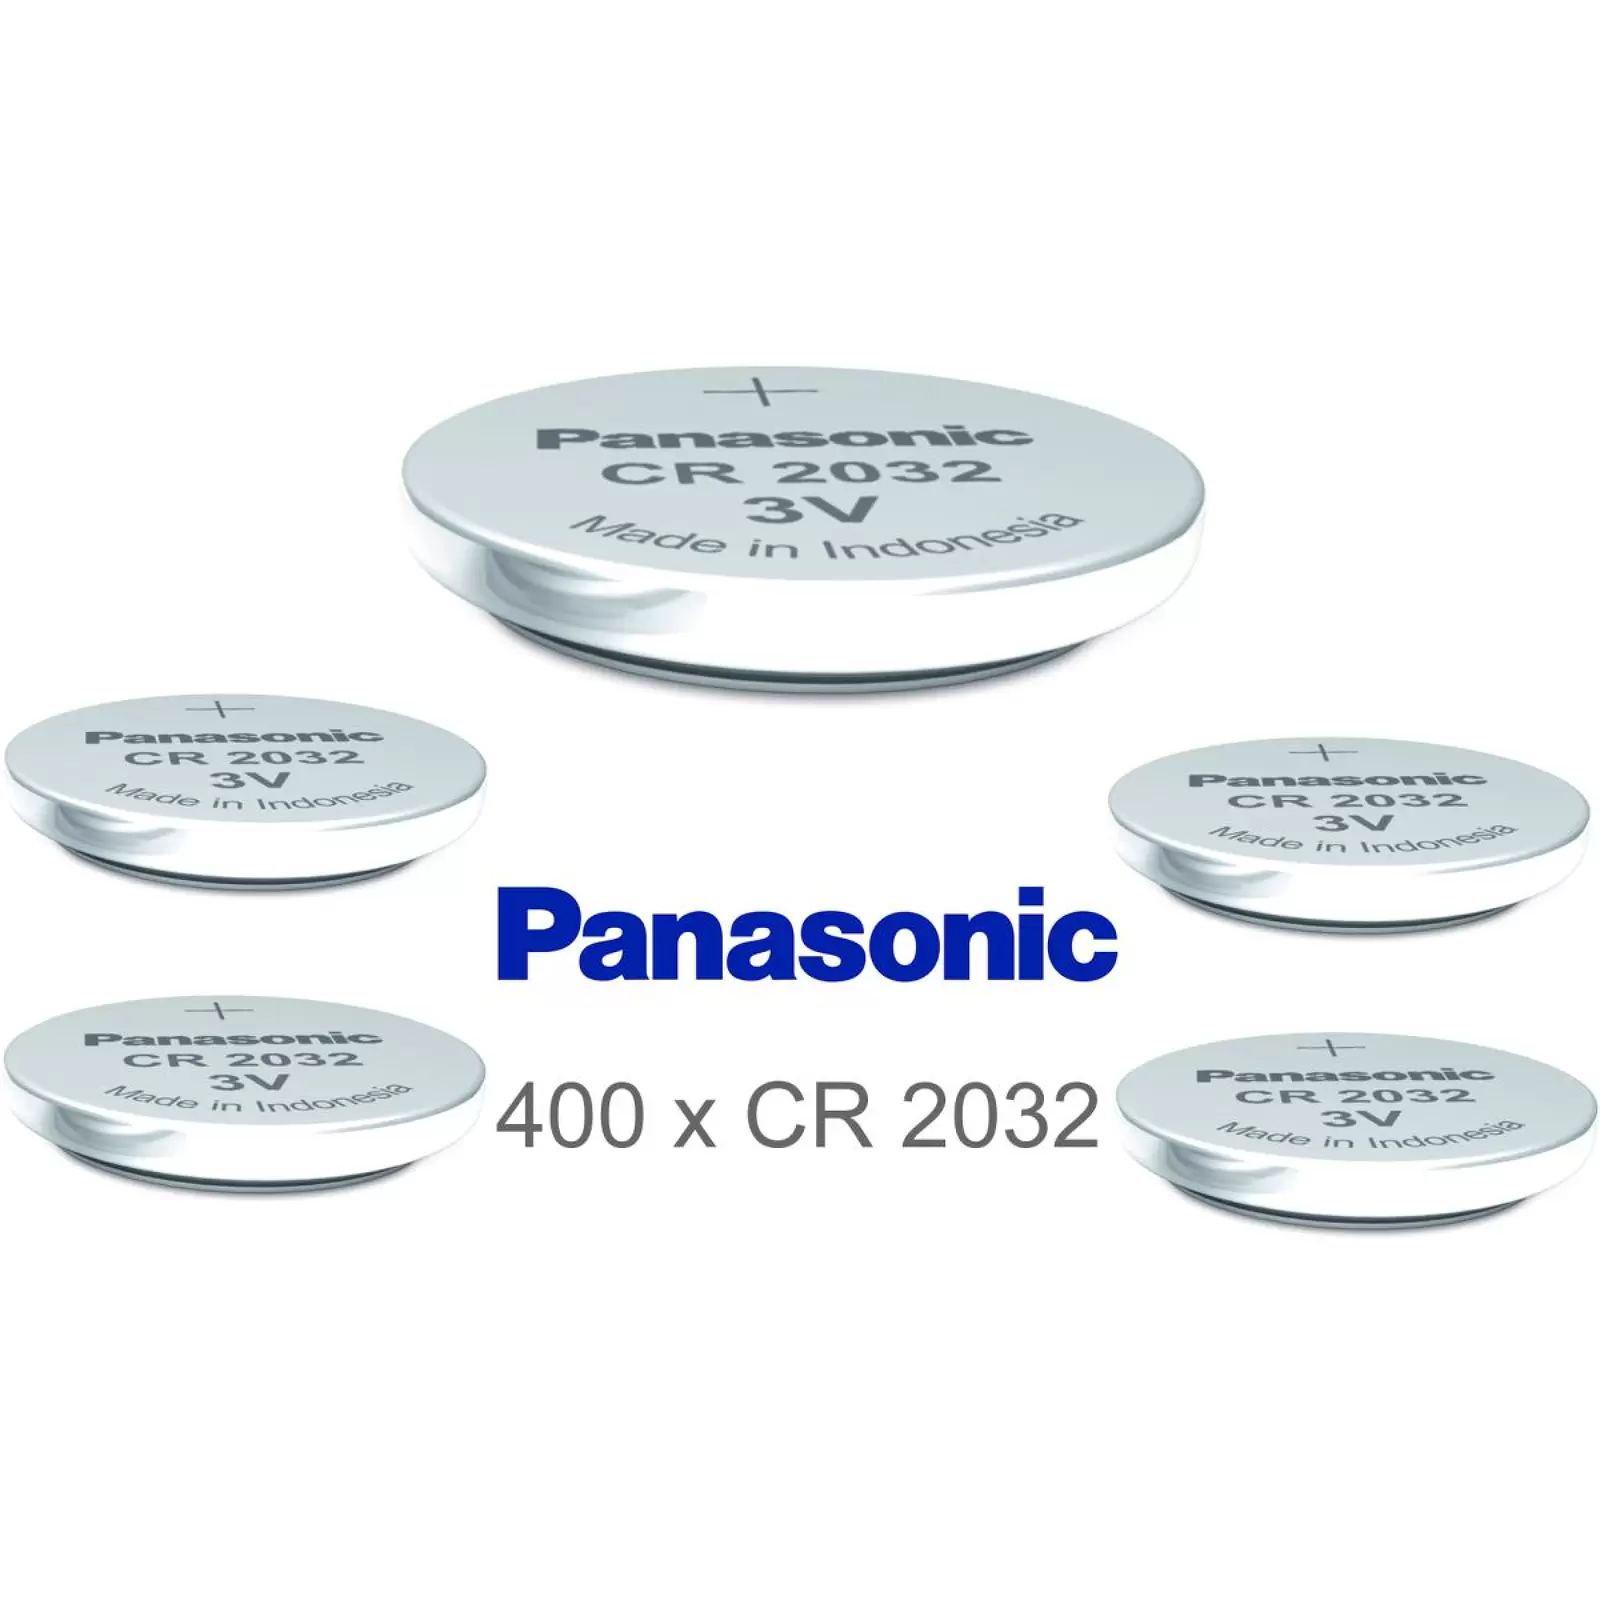 Panasonic Lithium Knopfzelle CR2032 / DL2032 / ECR2032 400 Stück lose